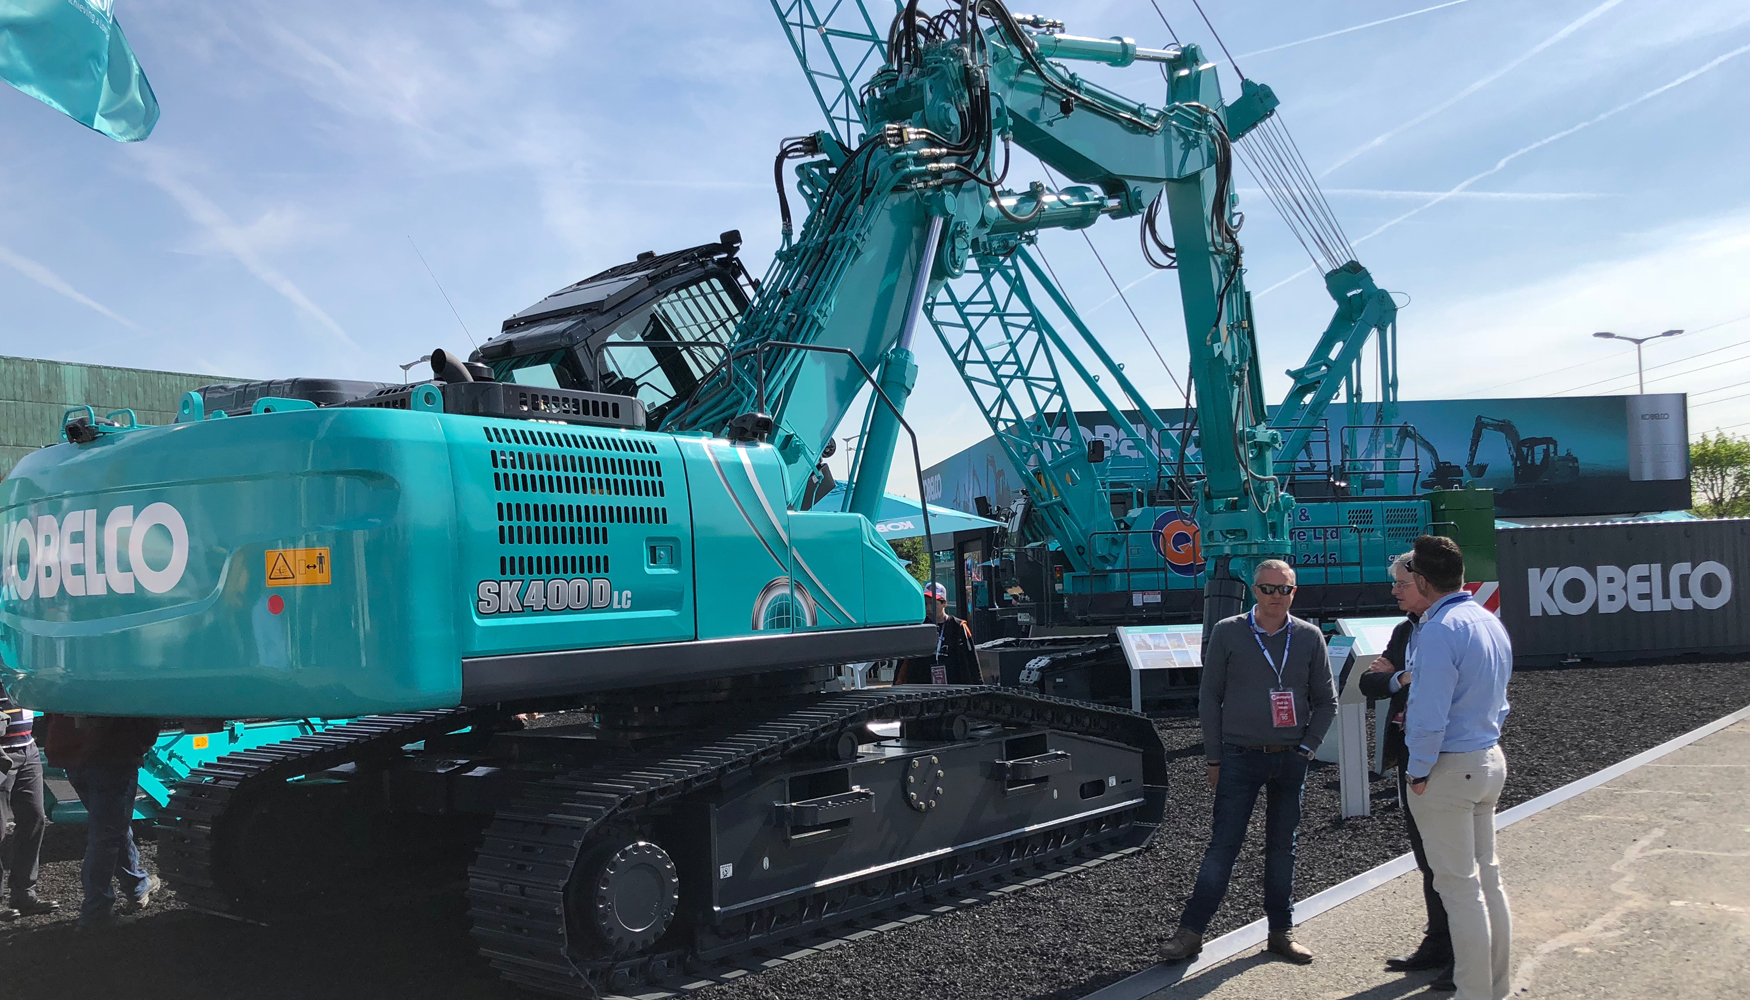 Stand de Kobelco Construction Machinery Europe BV en Intermat 2018